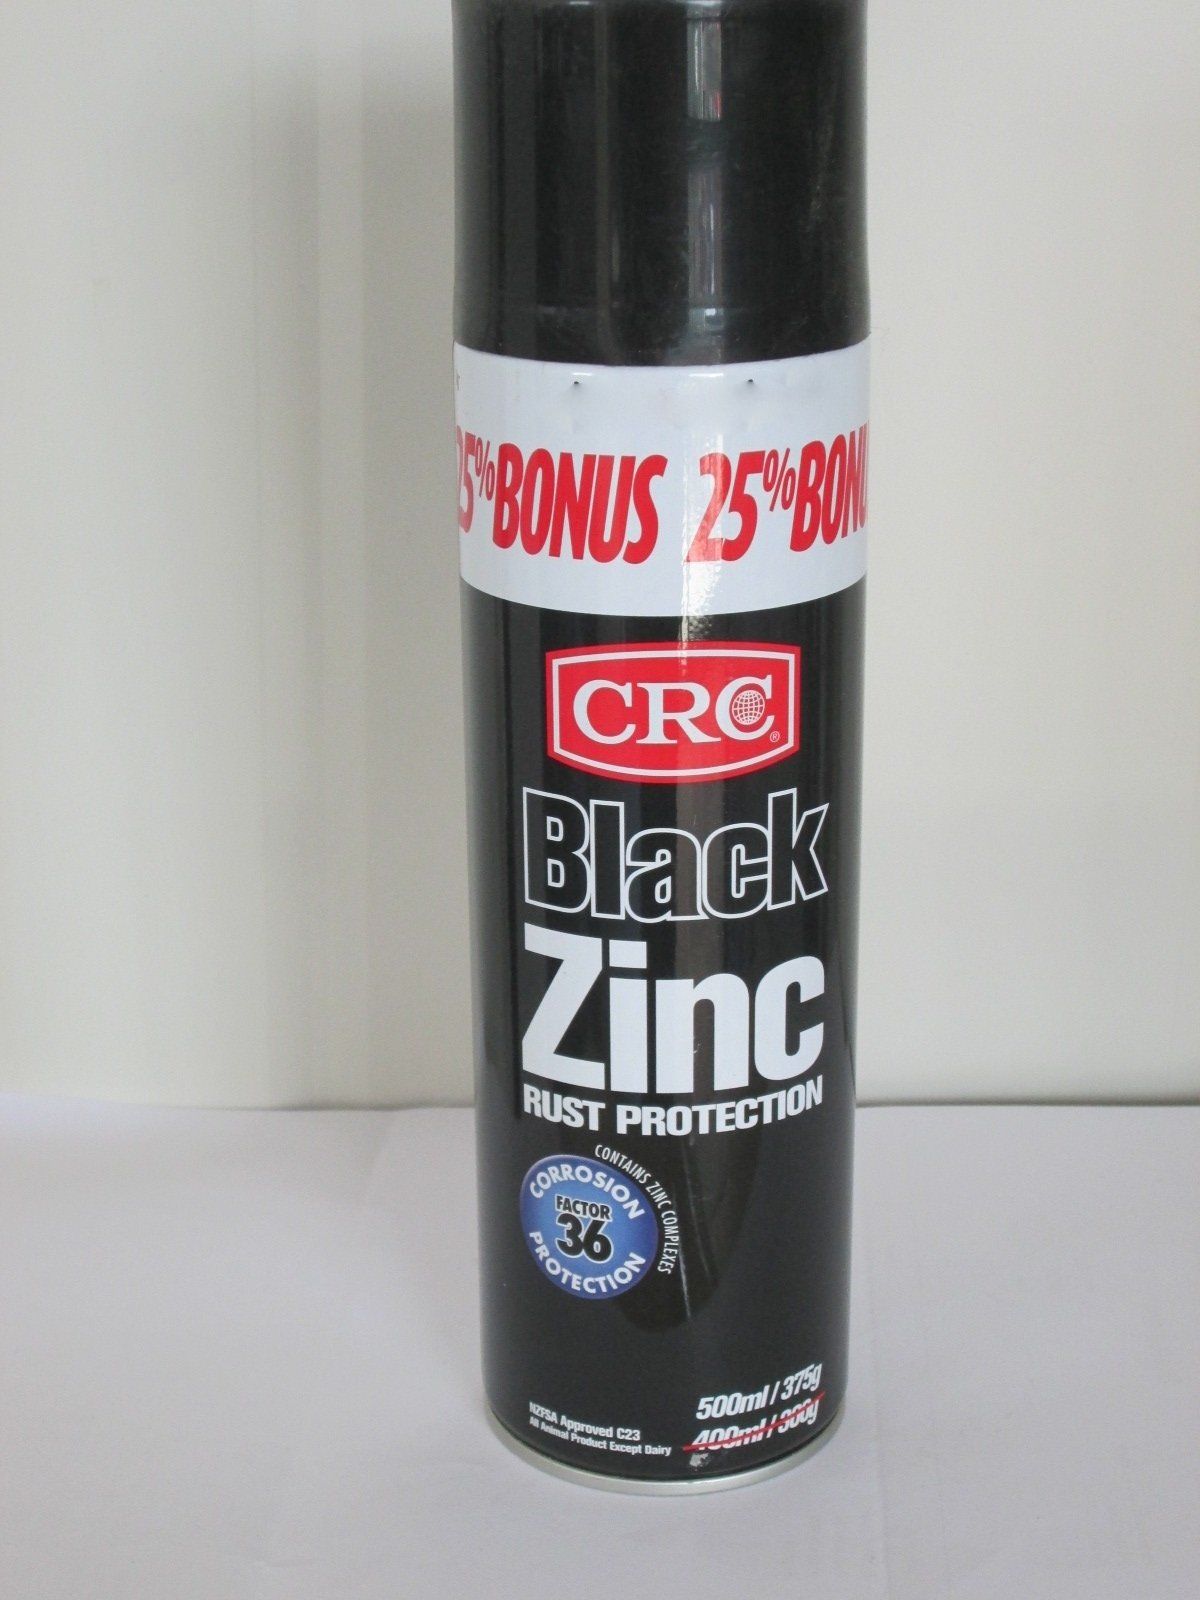 CRC black zinc rust protection